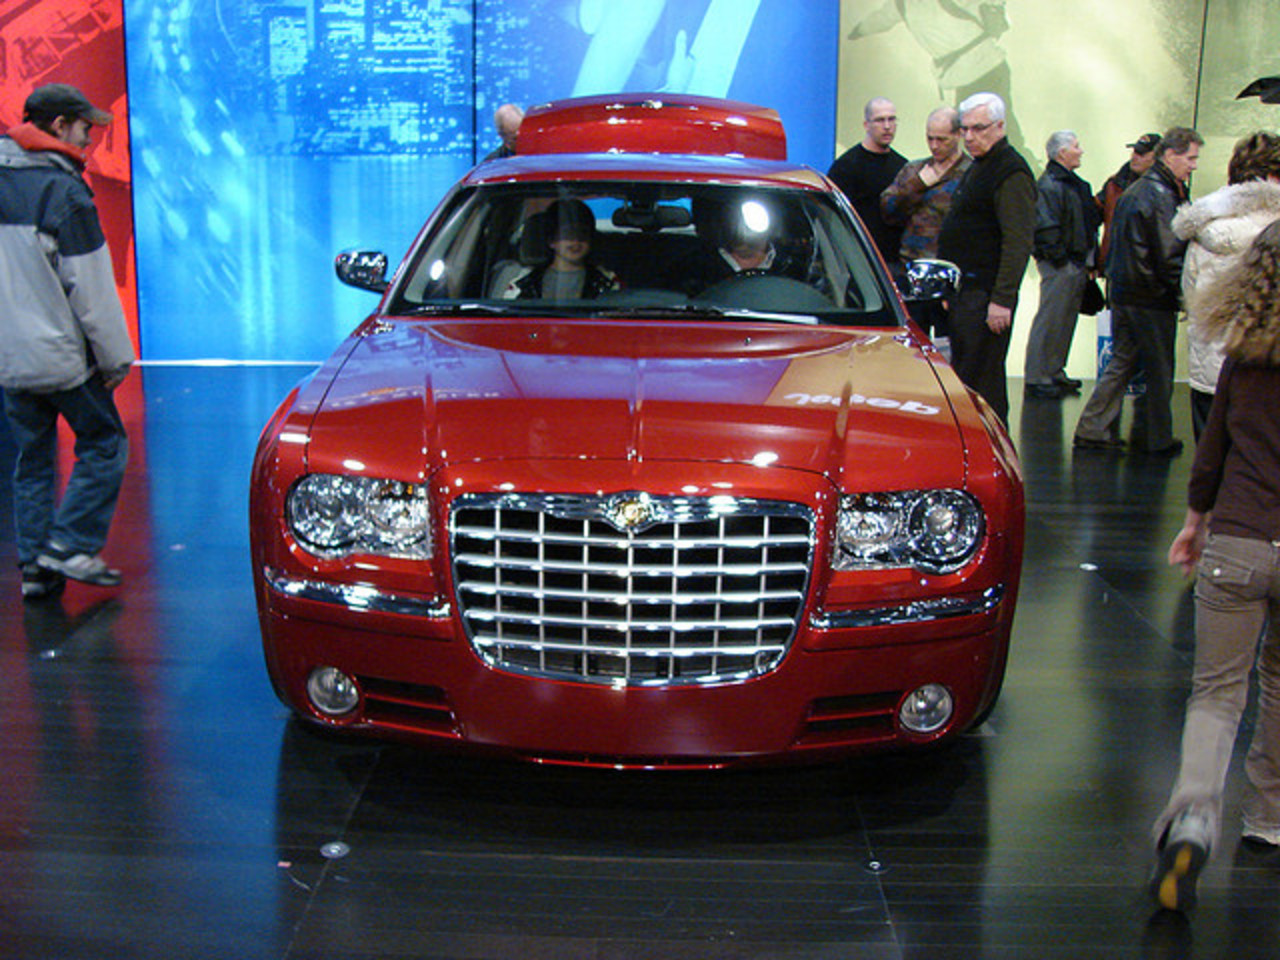 Chrysler 300 | Flickr - Photo Sharing!